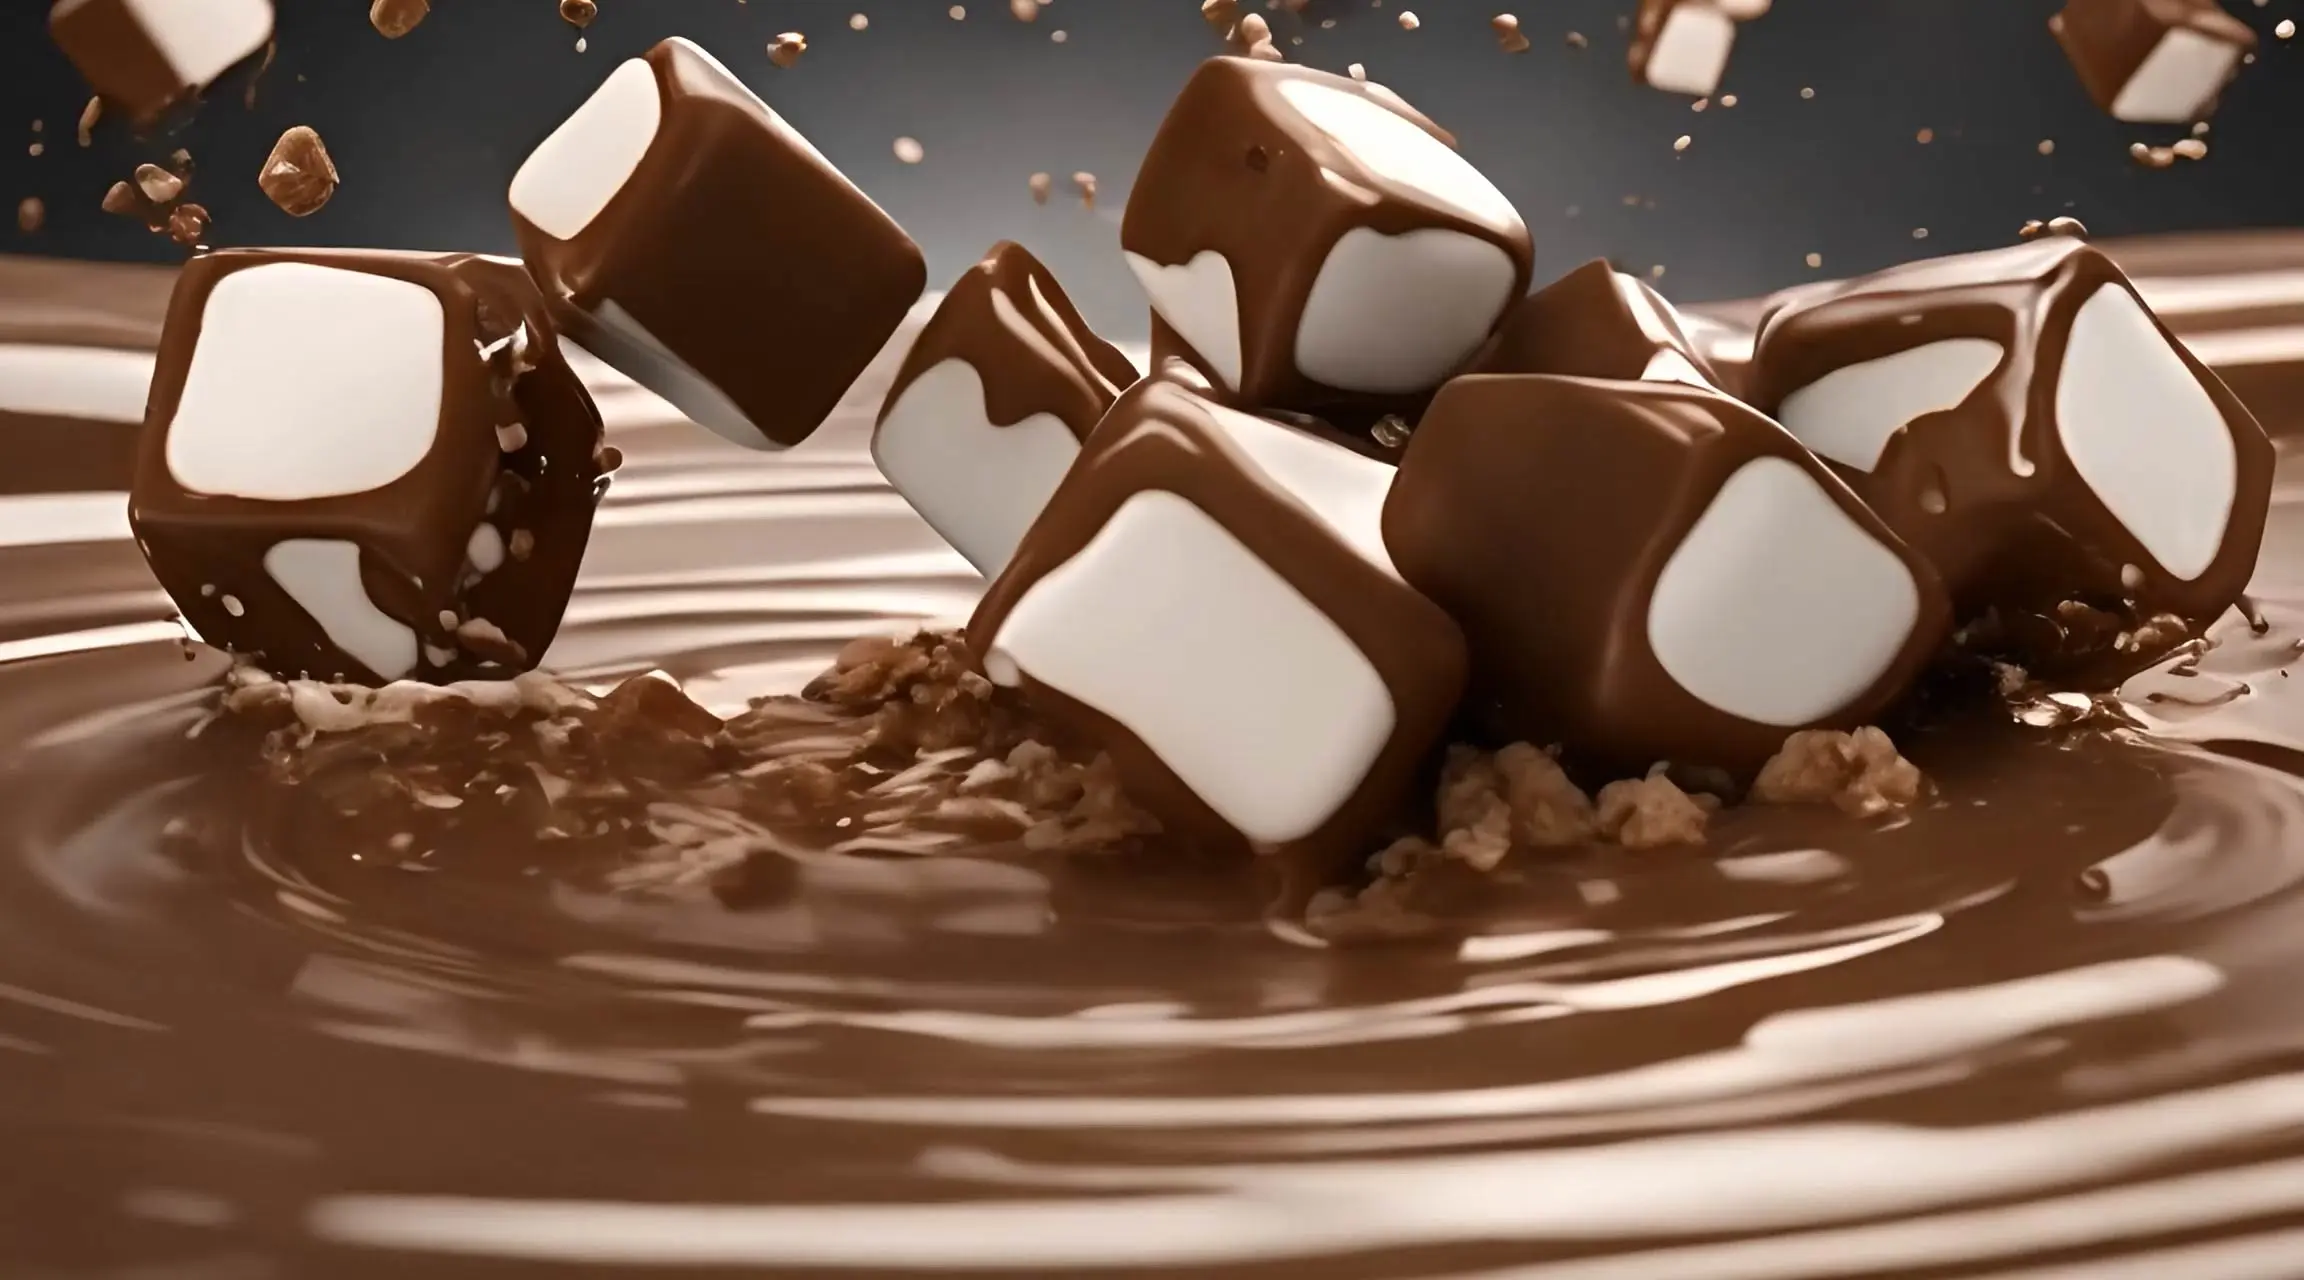 Melting Chocolate Delight Animation